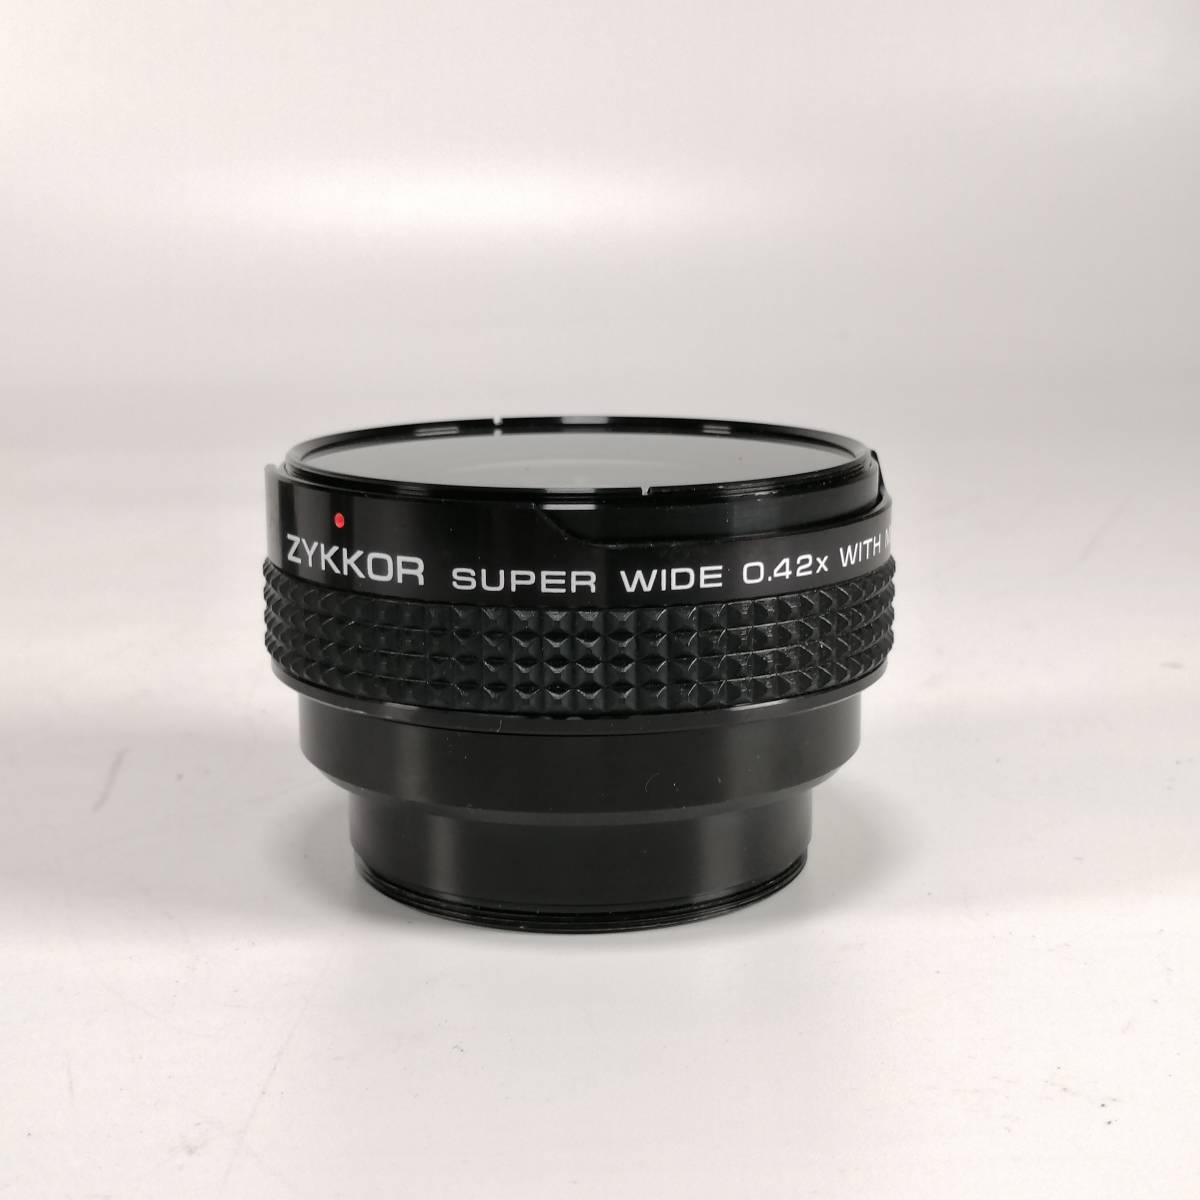 ZYKKOR SUPER WIDE 0.42x WITH MACRO LENS 1/1.2x 55Φ SER-VII 52mm カメラ レンズ _画像2